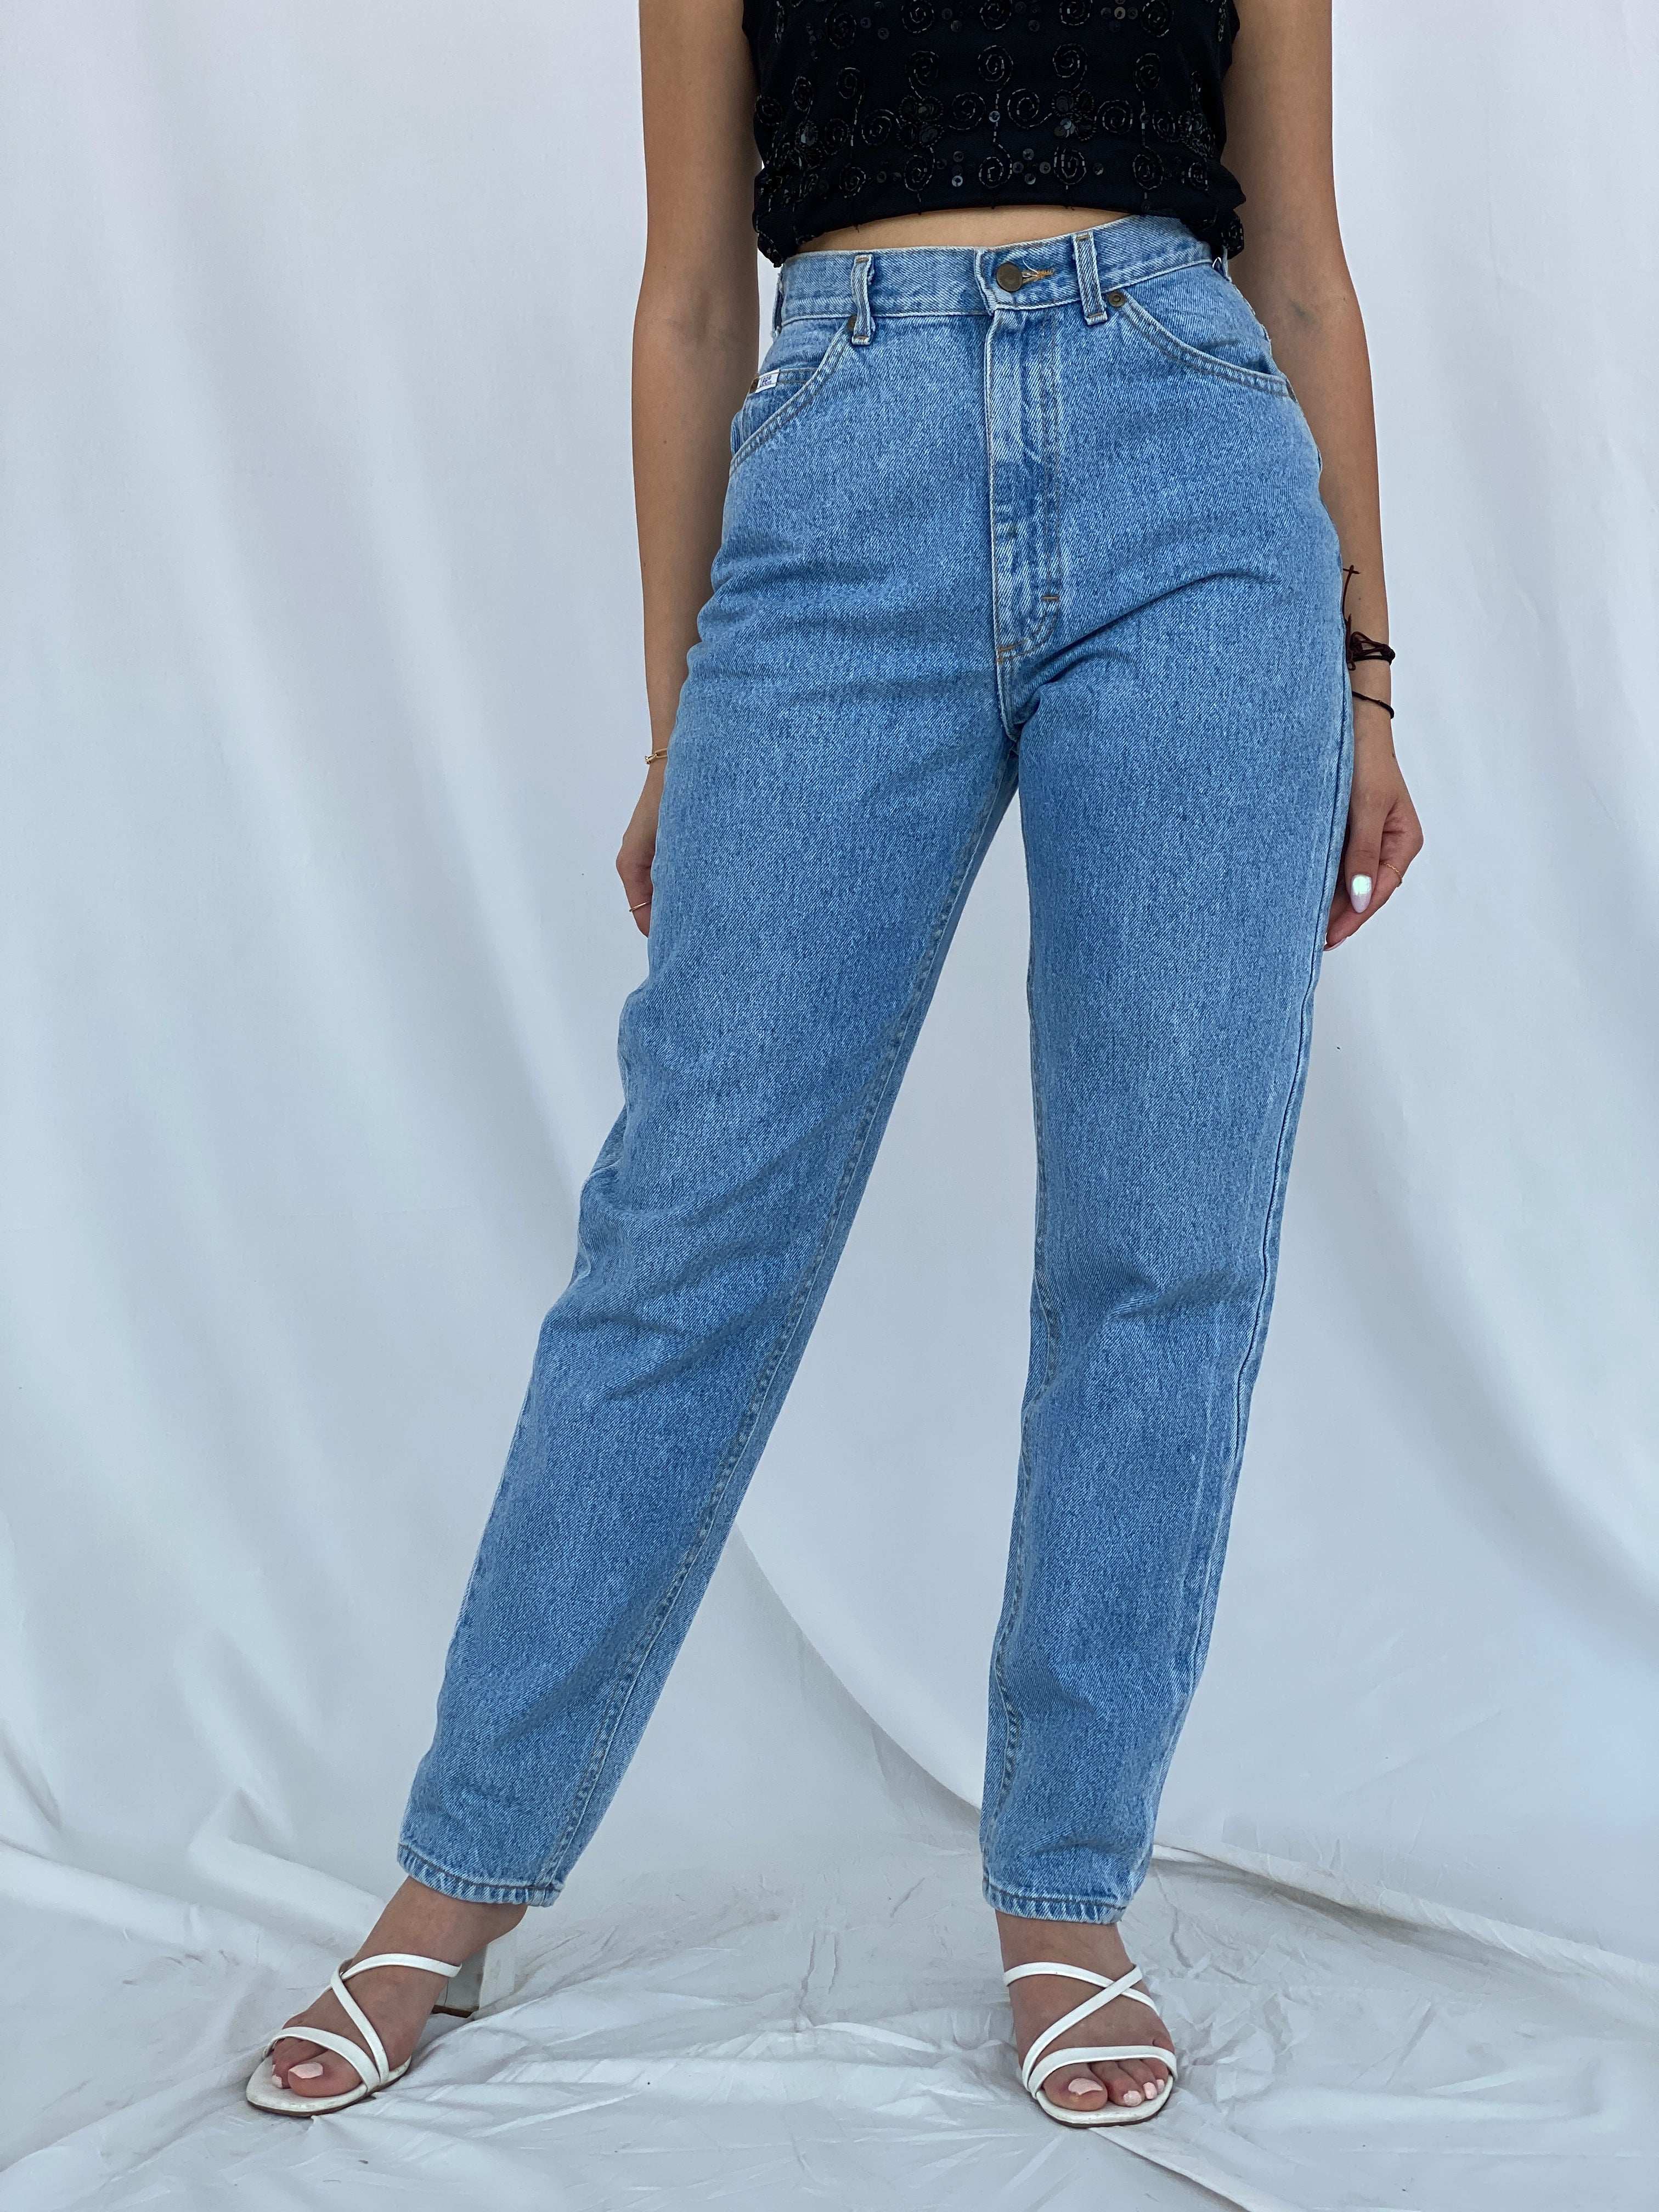 Vintage Lee Jeans Size 36EUR - Balagan Vintage Jeans jeans, Juana, lee jeans, NEW IN, straightcut, vintage, vintage lee jeans